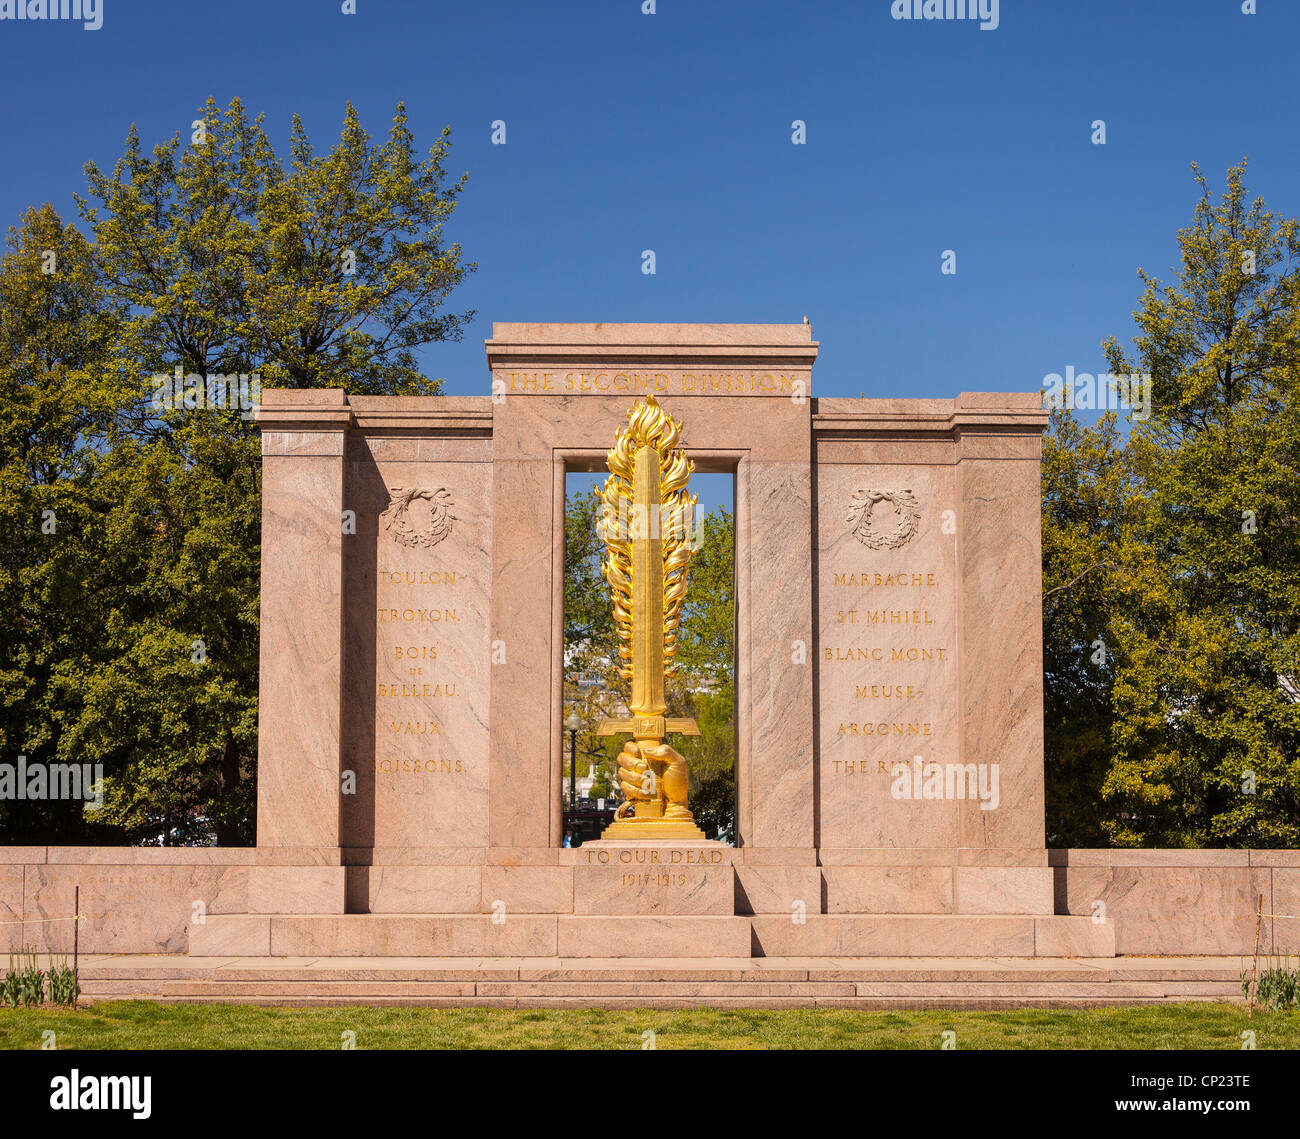 WASHINGTON, DC, USA - The Second Division World War I Memorial. Stock Photo